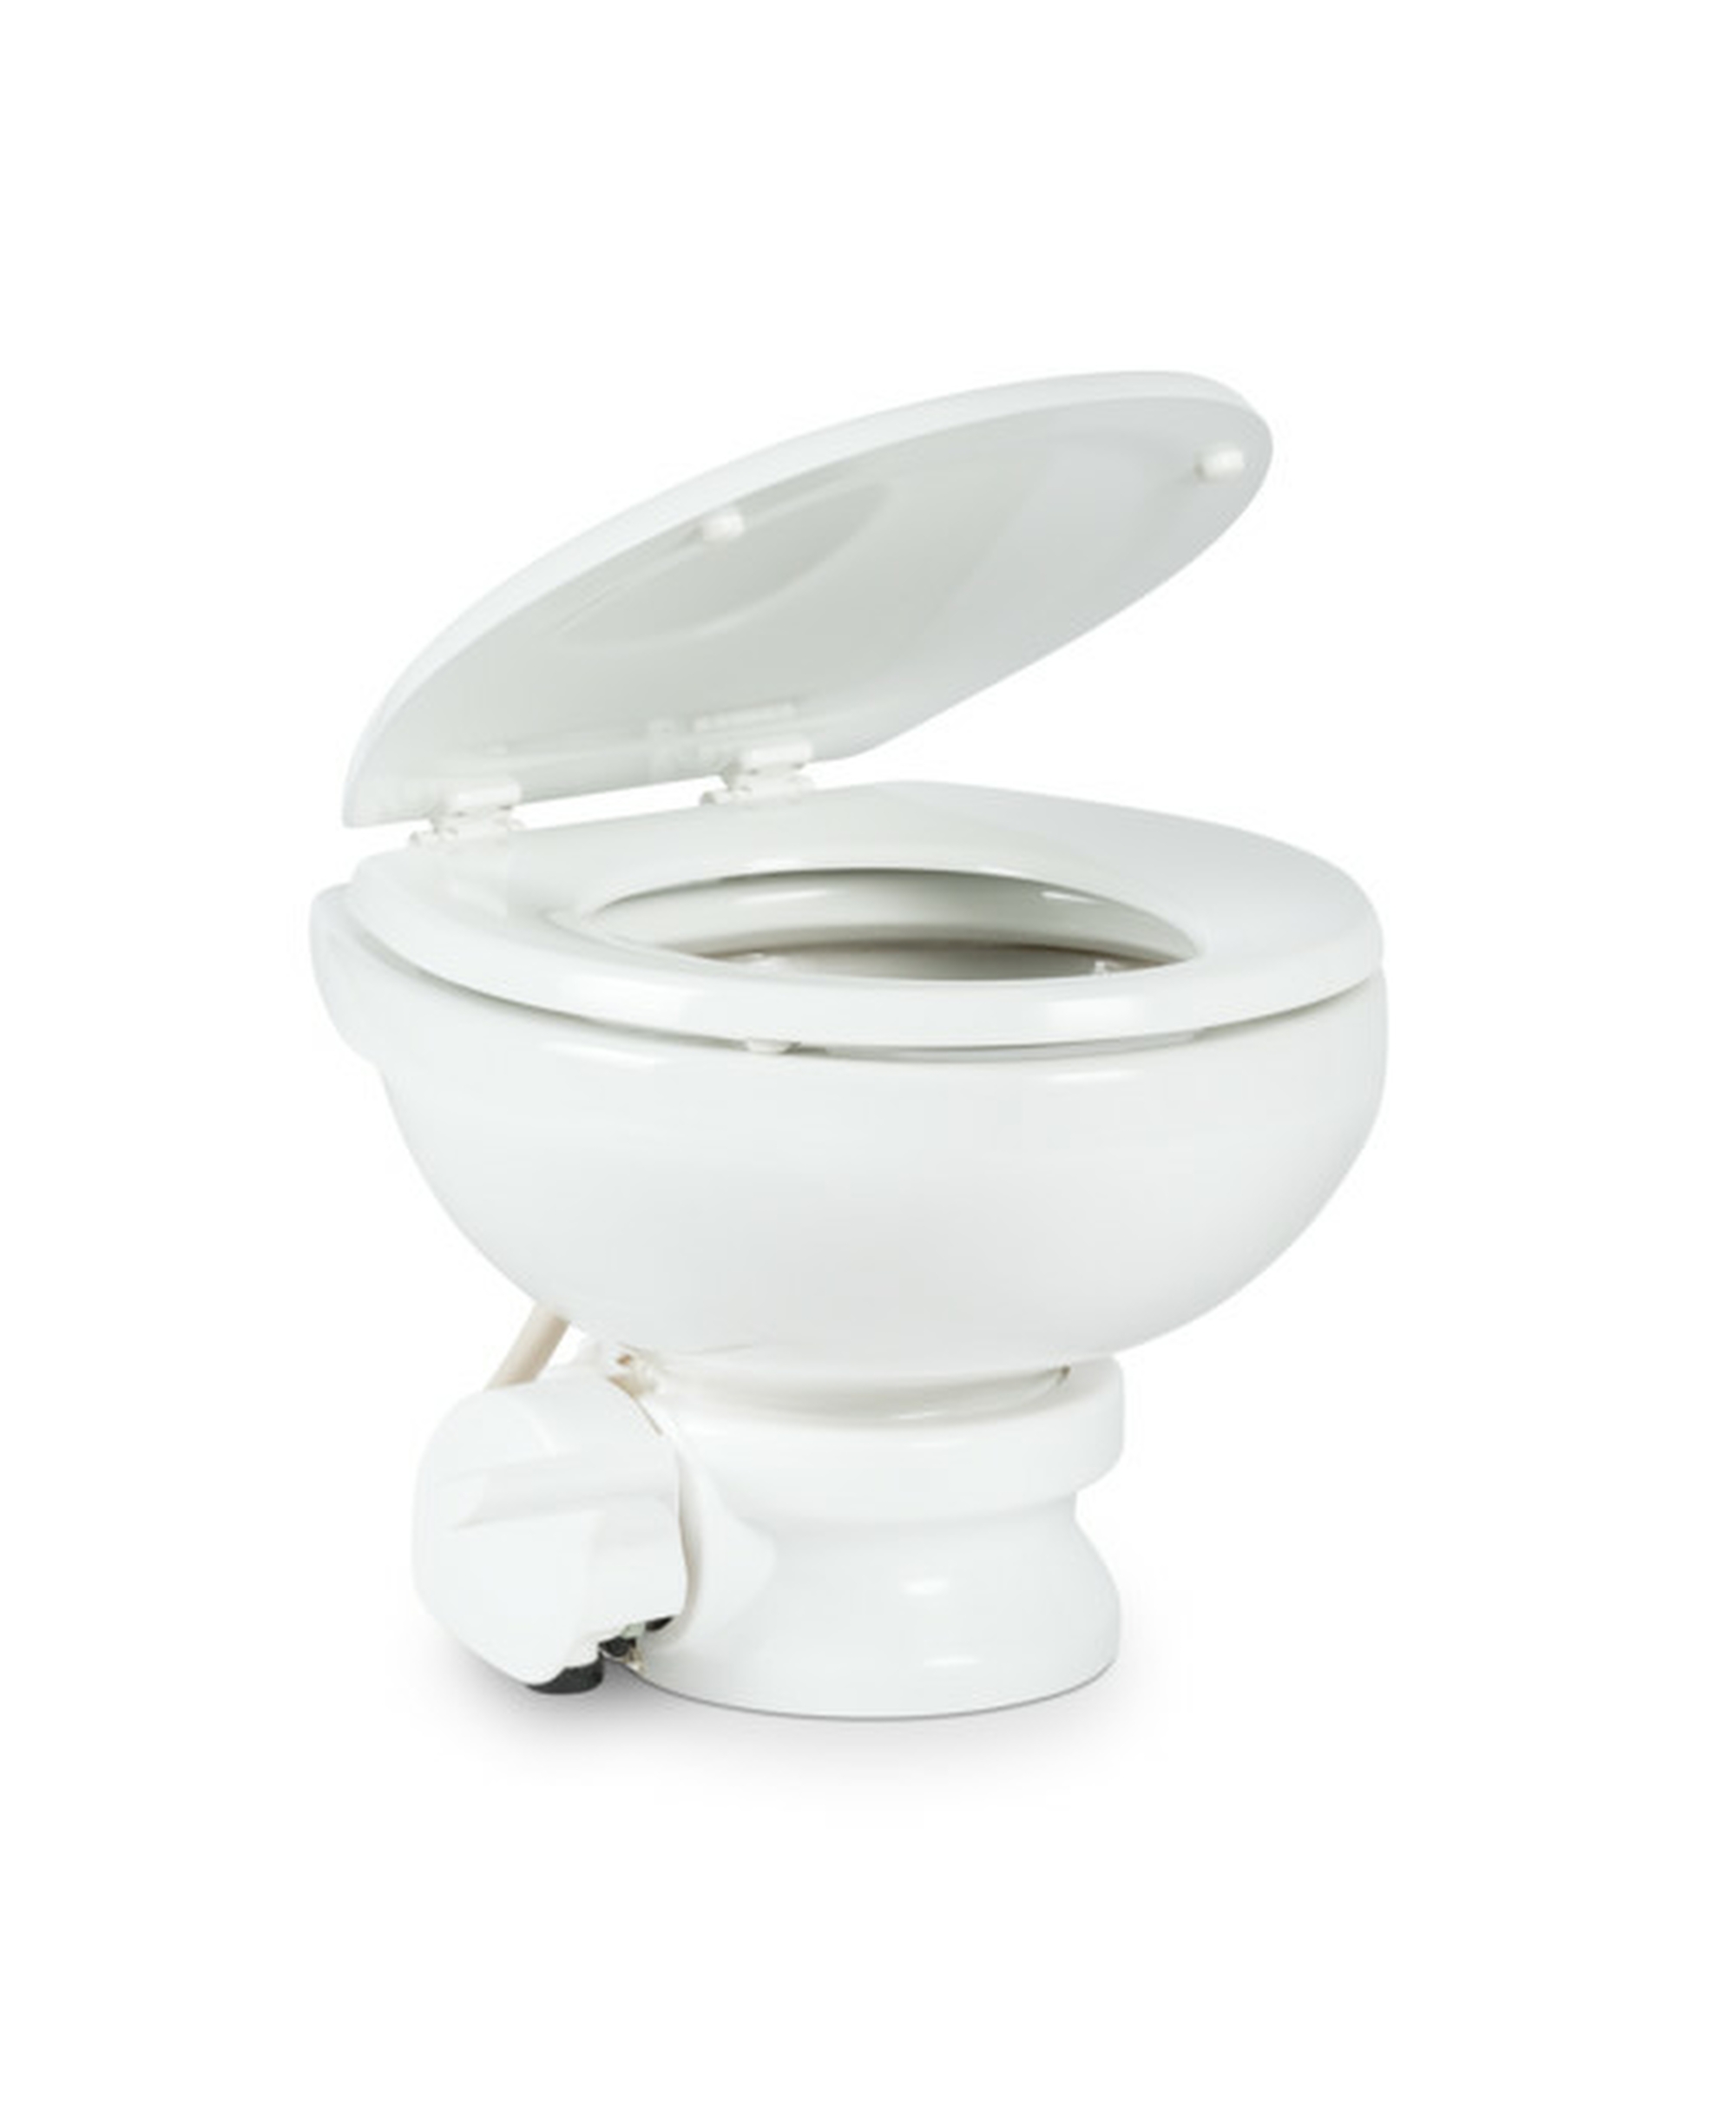 Dometic VacuFlush Series Toilet Spares